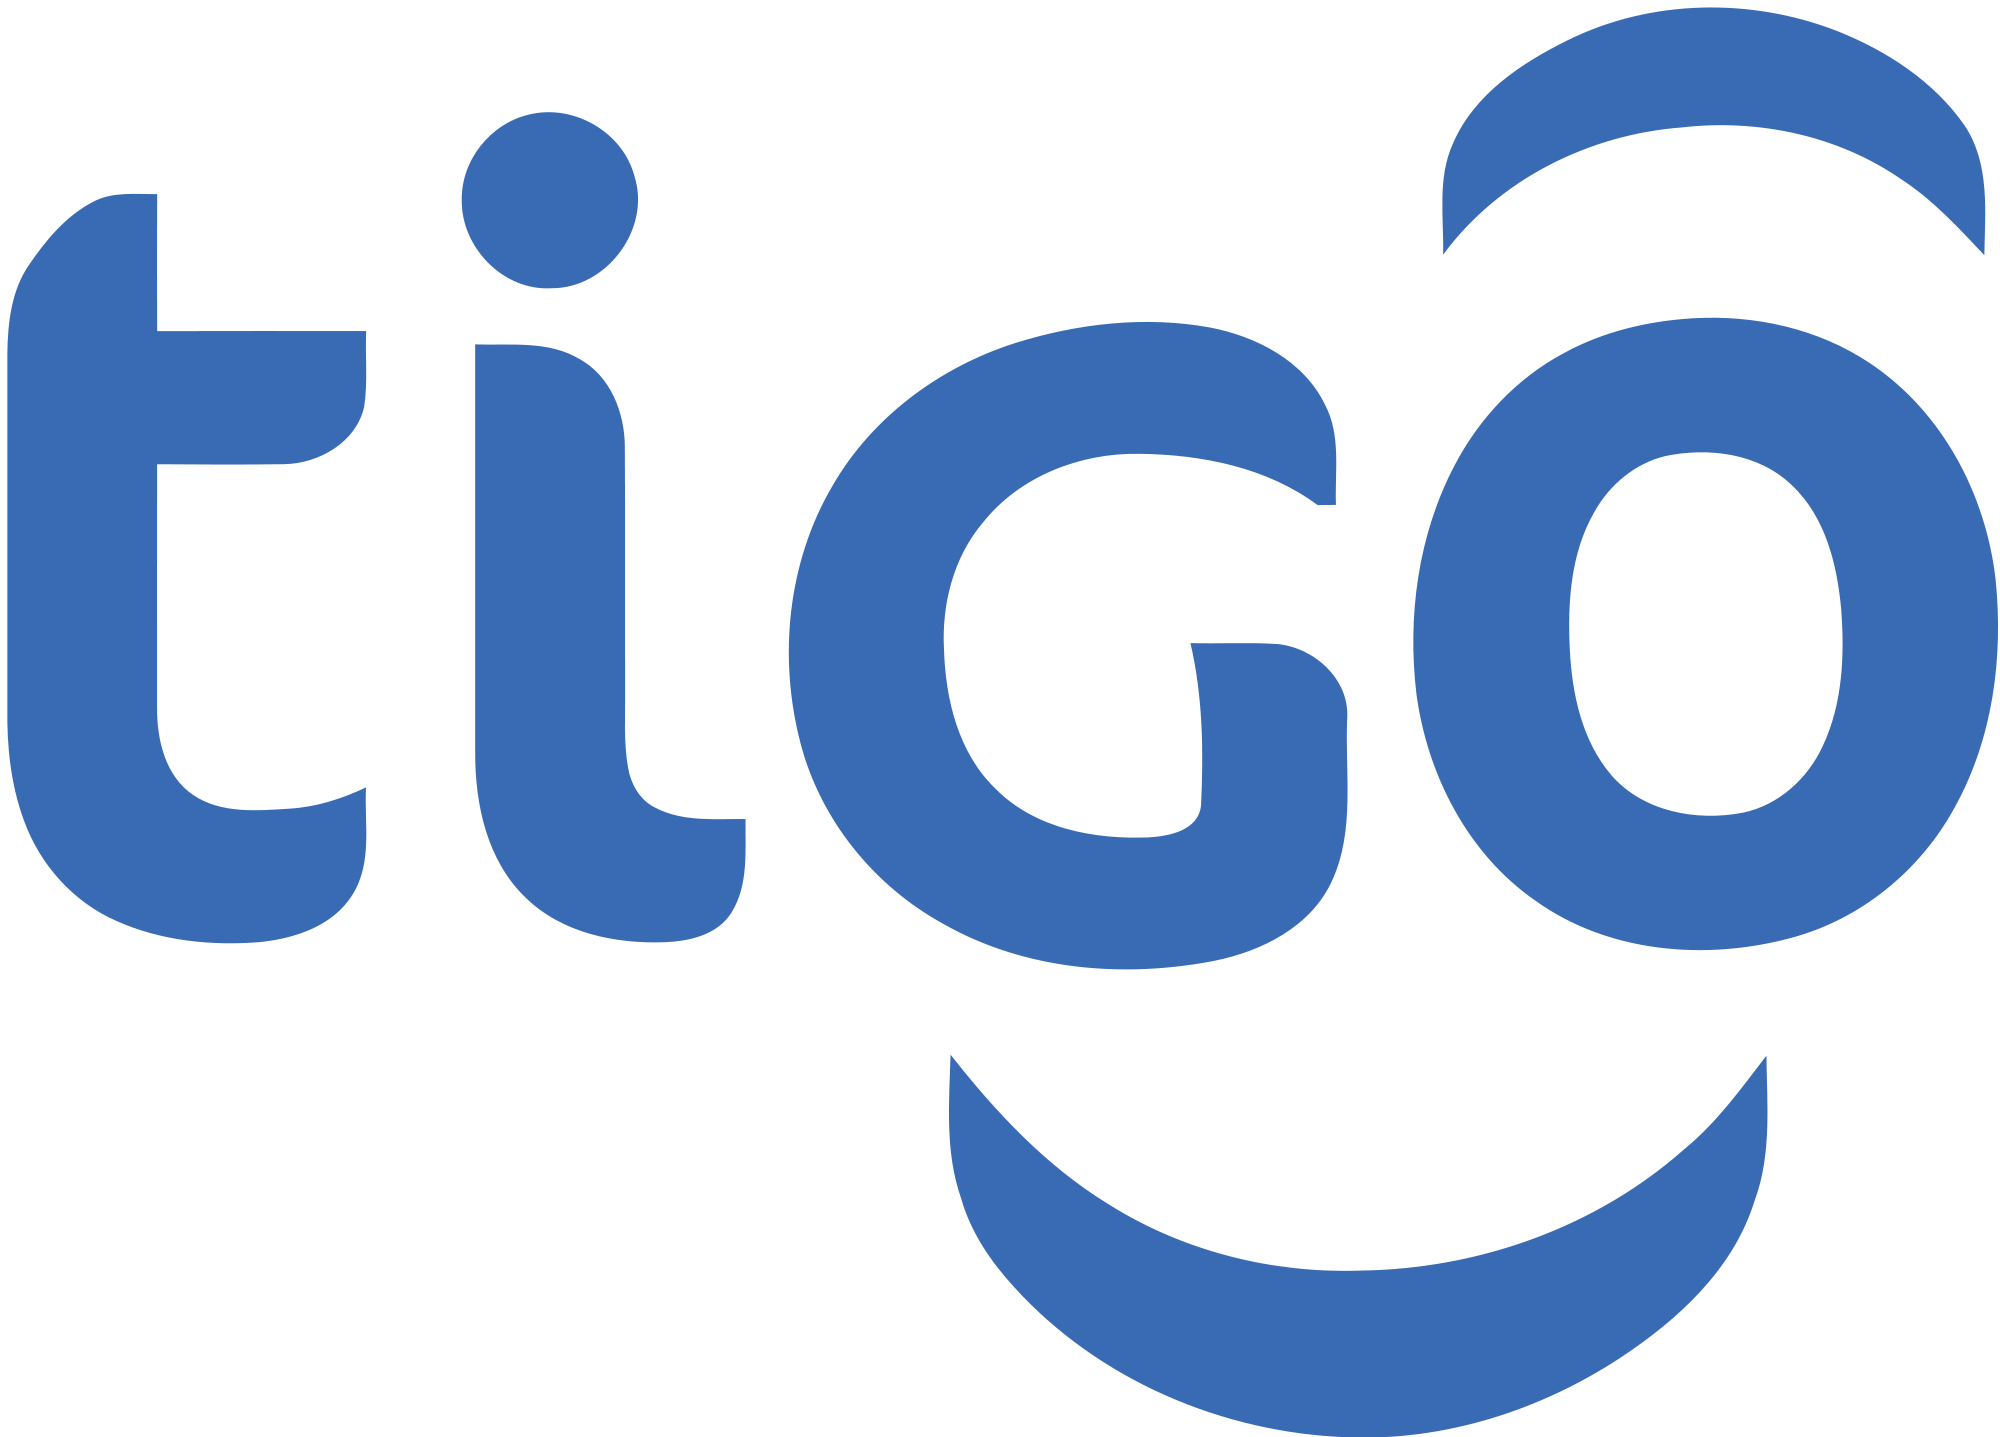 Tigo Logo 9 Png Download De Logotipos - vrogue.co